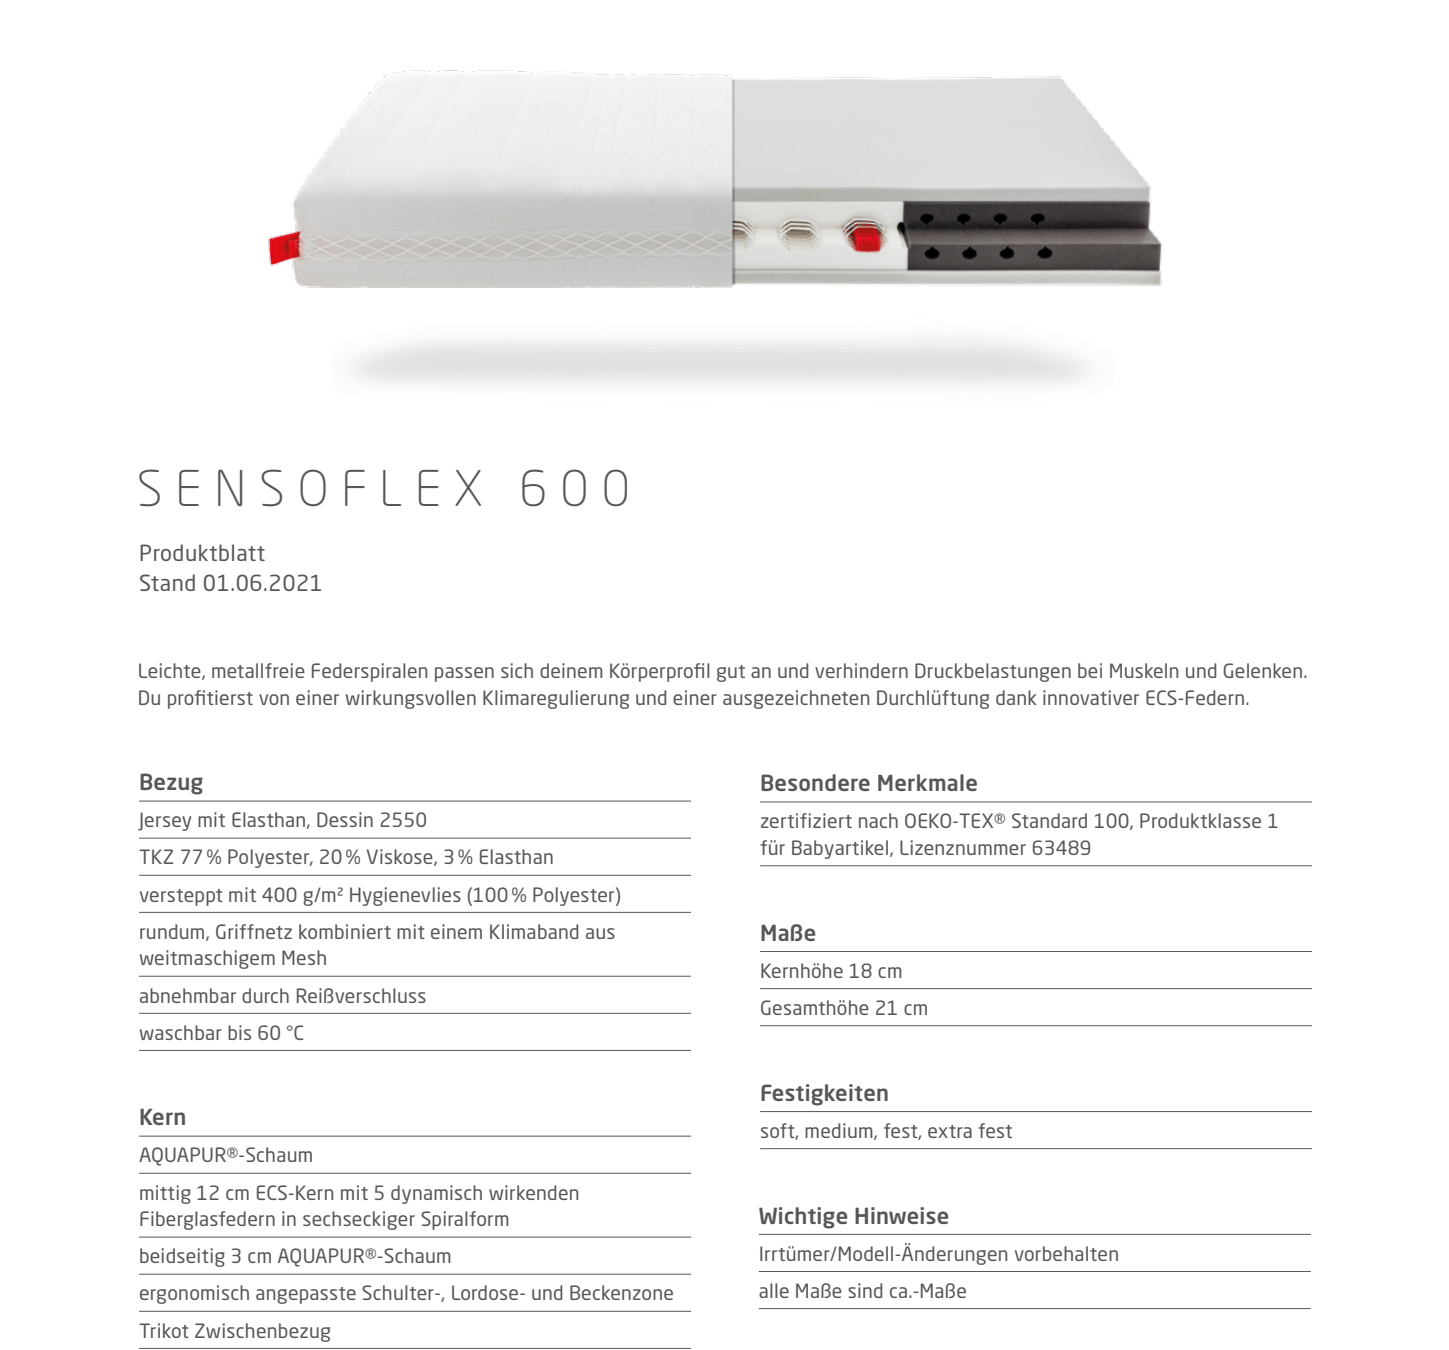 Sensoflex 600